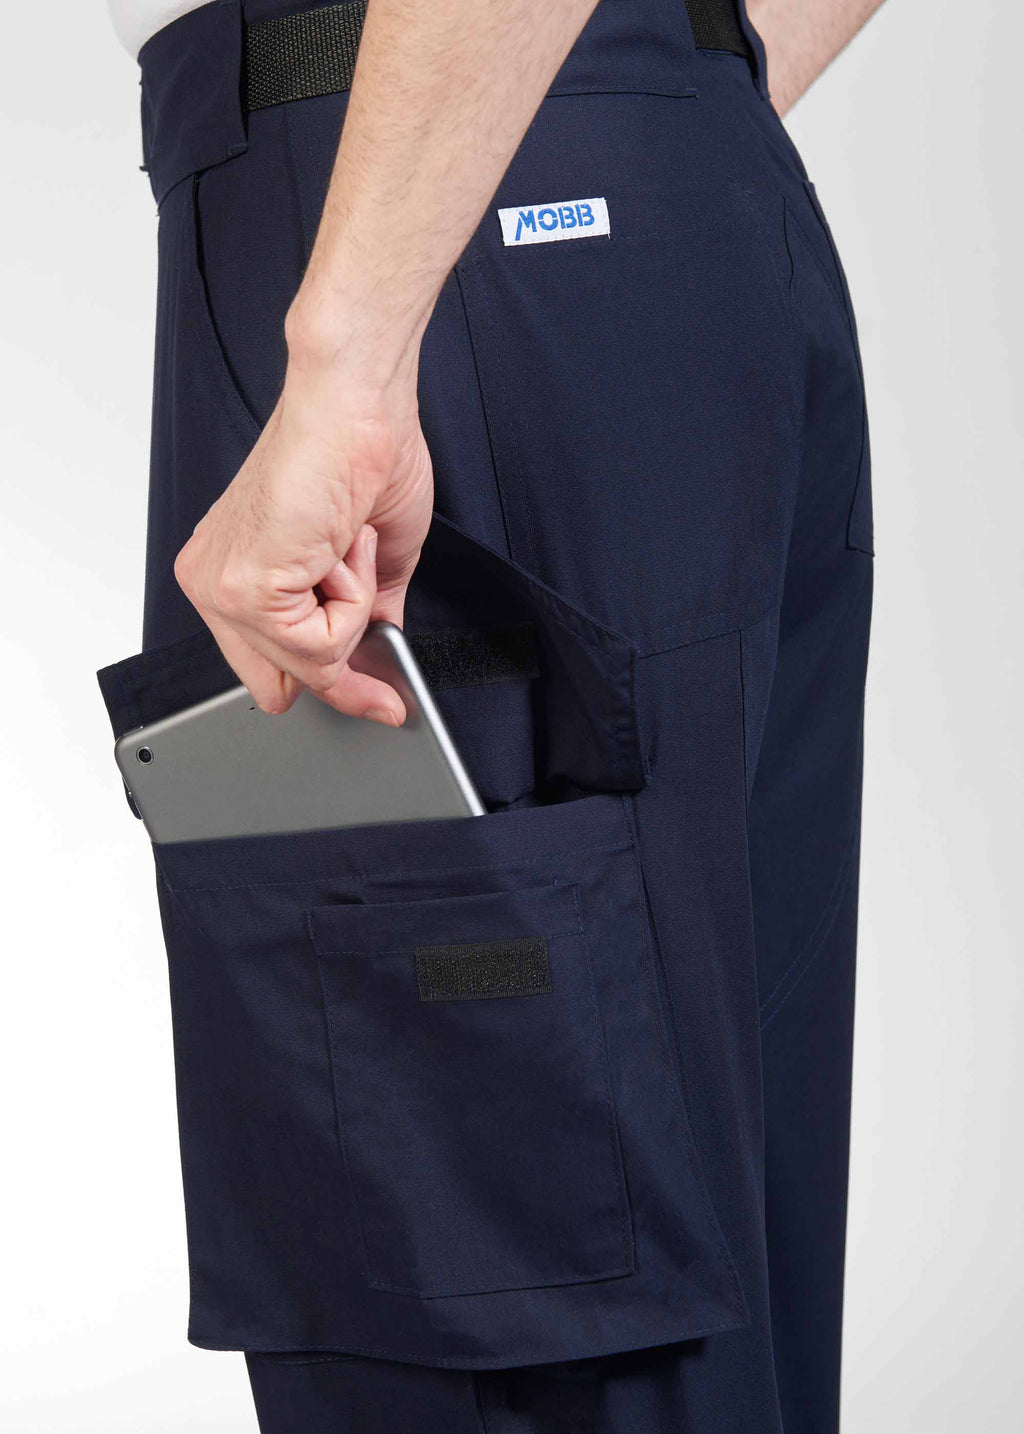 Product - MOBB Unisex Six Pocket Cargo Pant - Tall